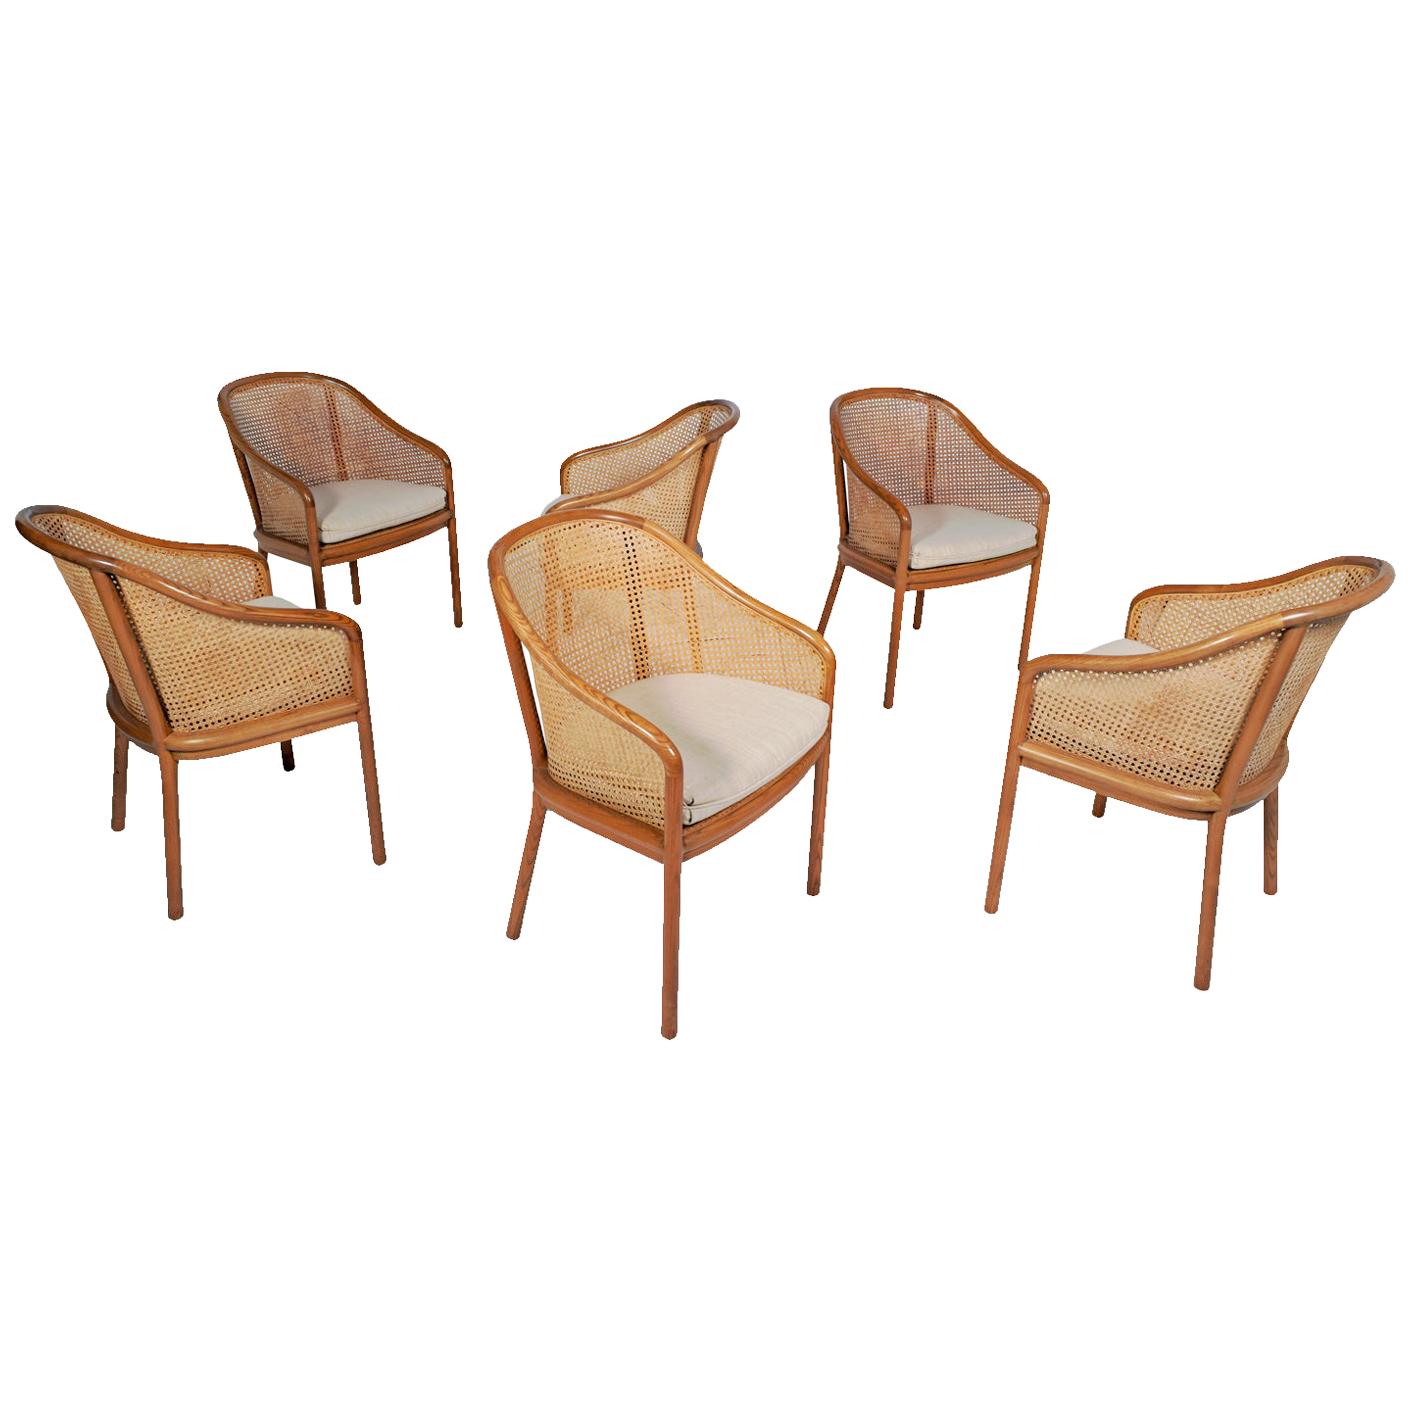 Six Ward Bennet Armchairs for Brickel Assoc. Design 1960s